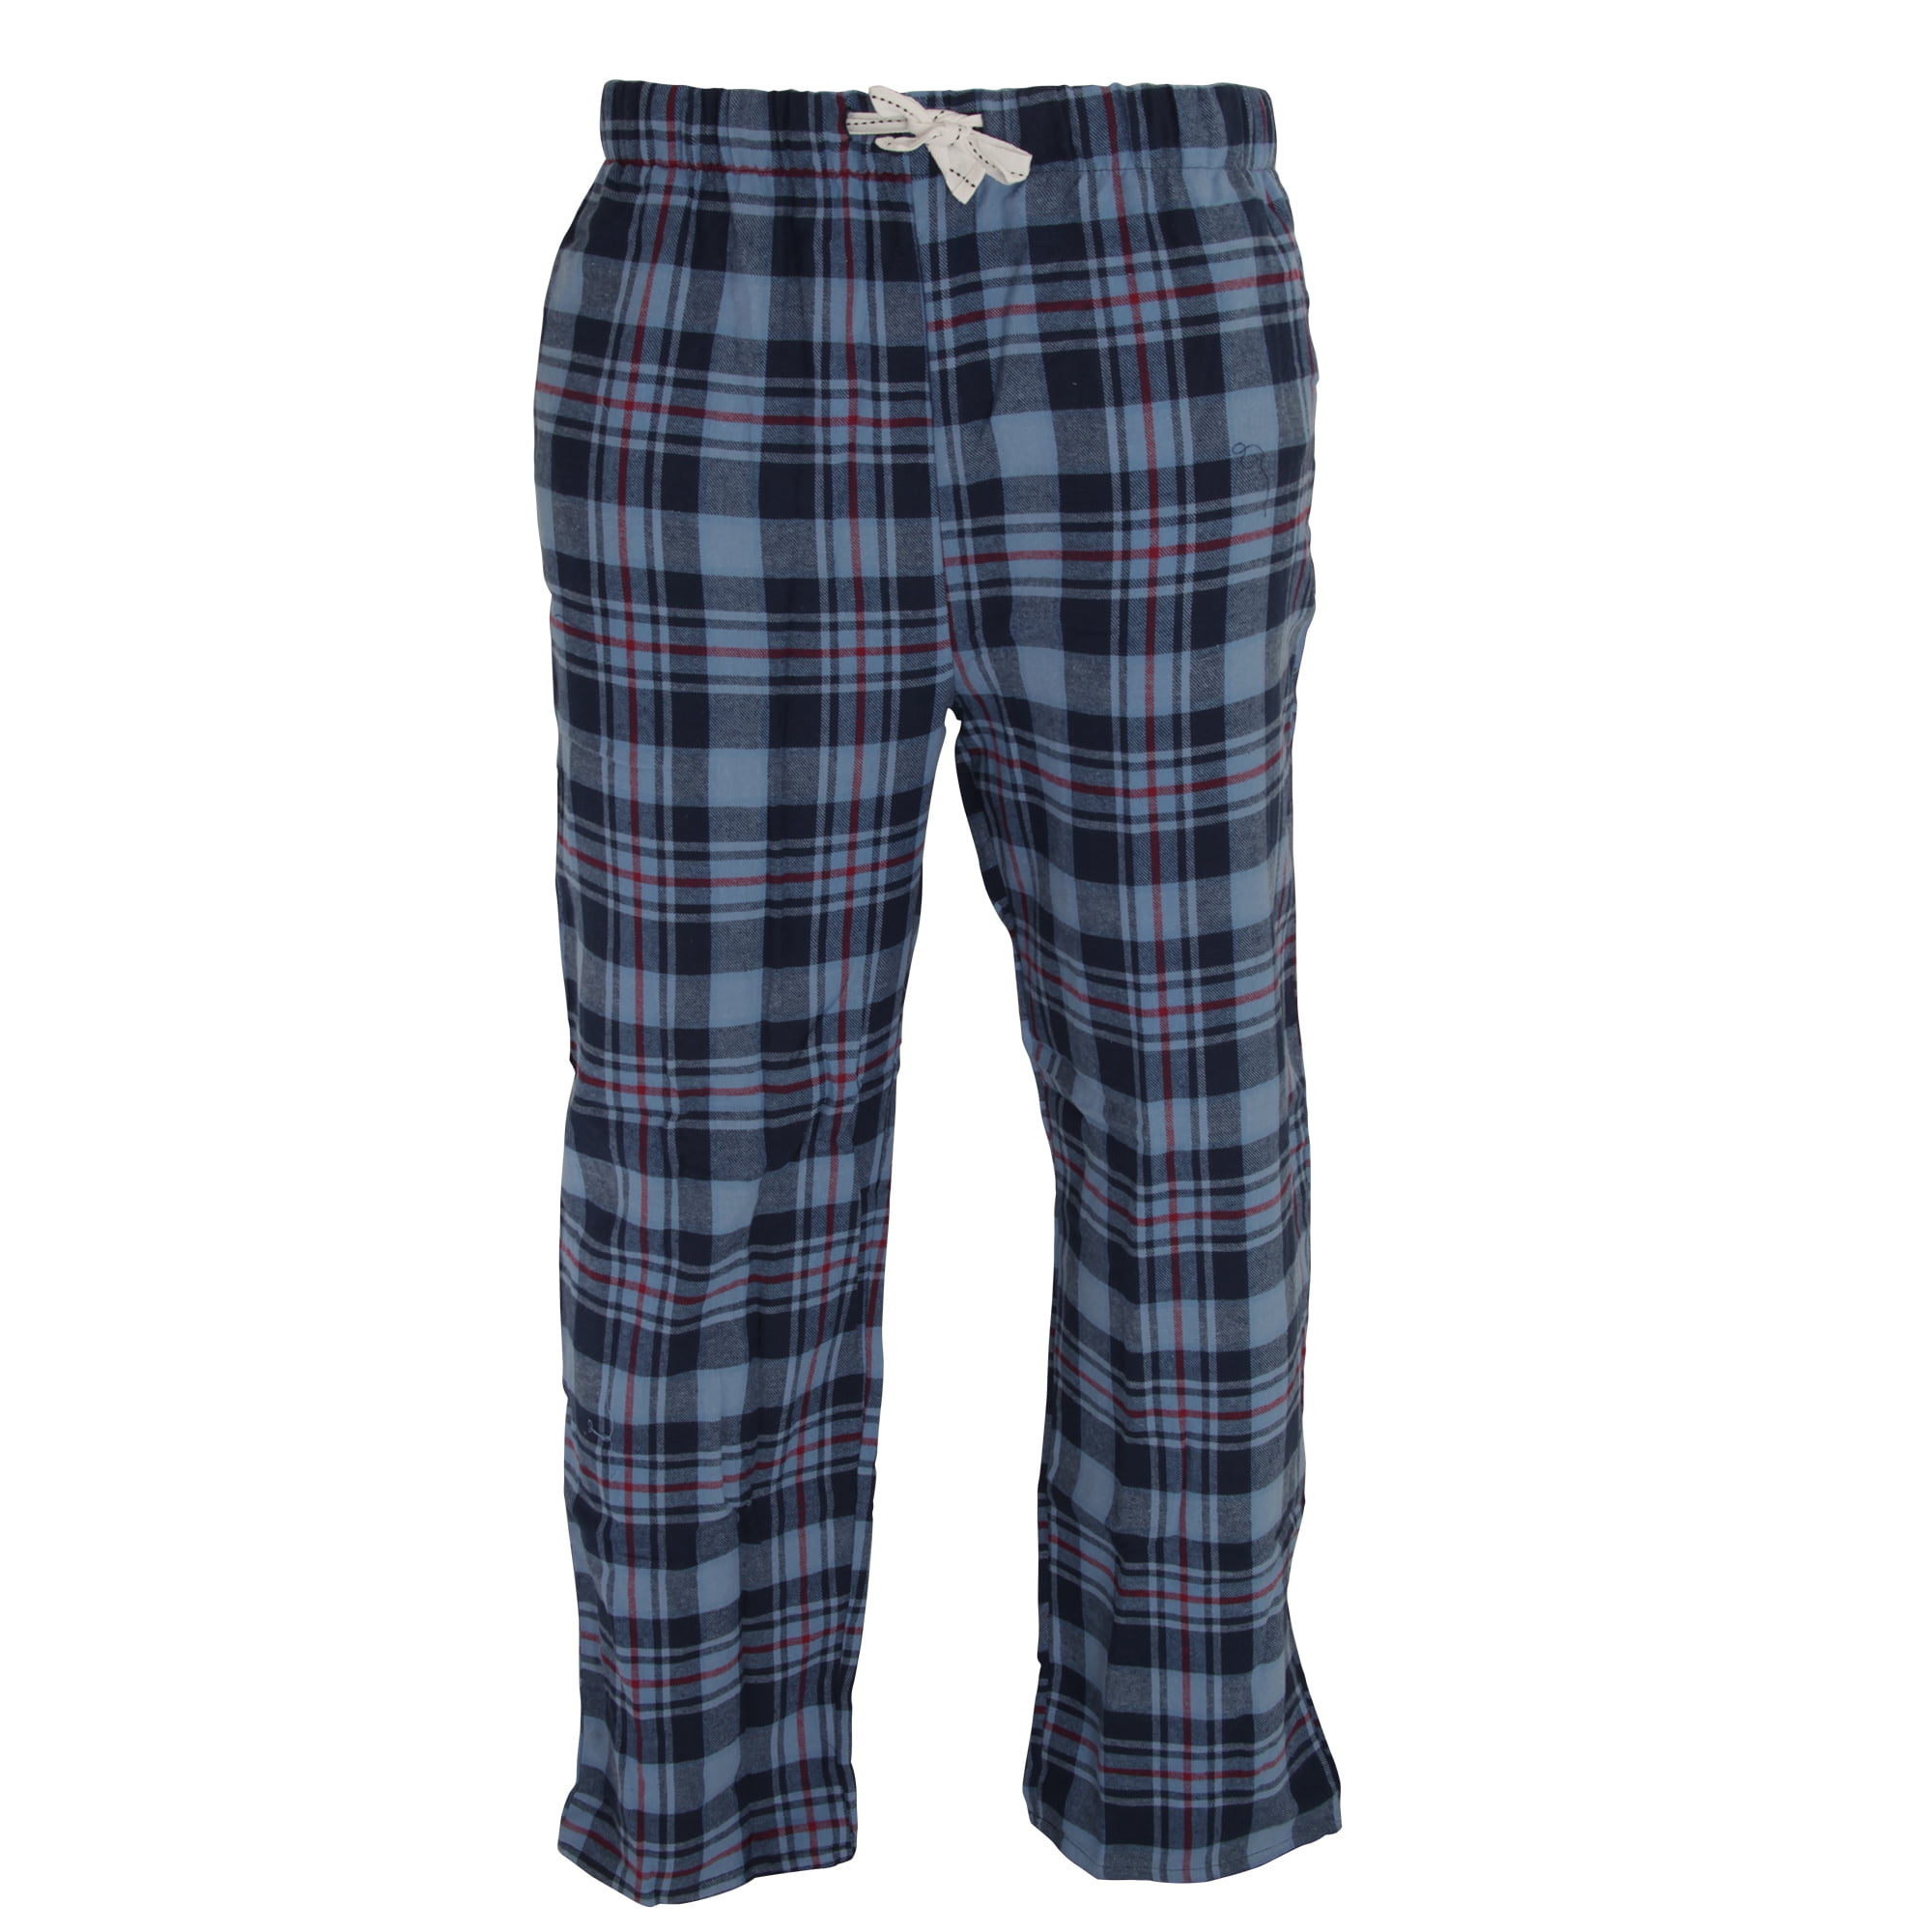 Cargo Bay Mens Cotton Check Pyjama Bottoms / Lounge Pants | Walmart Canada